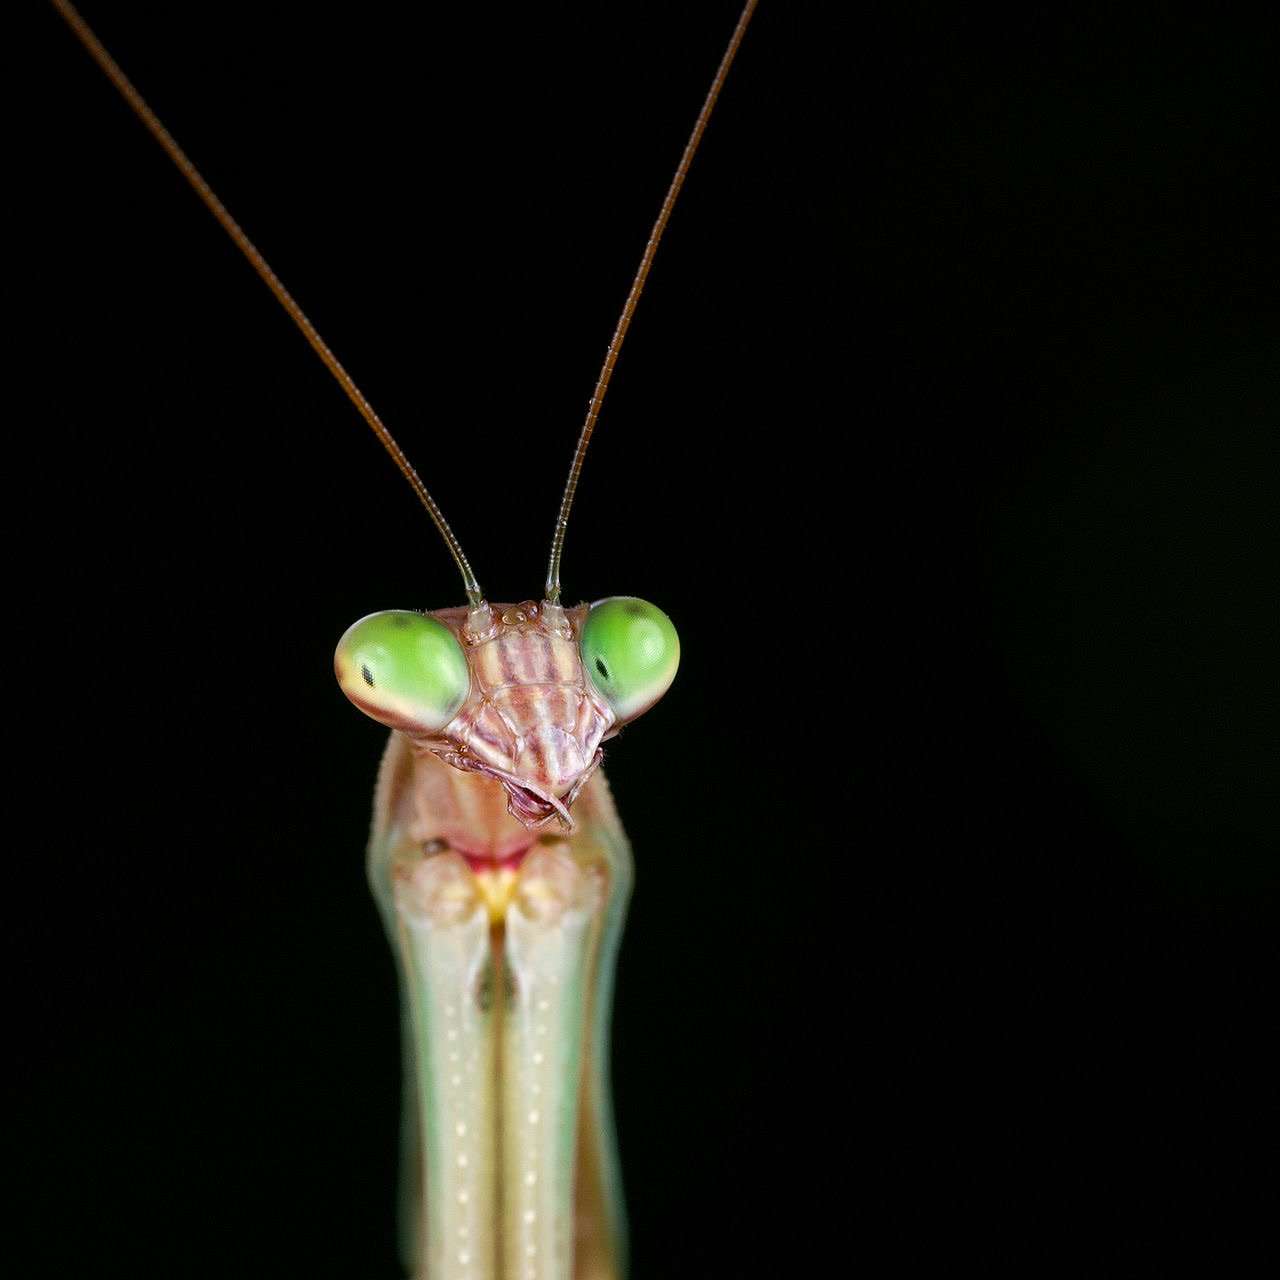 Chinese Mantis Live Nymphs T sinesesis pest control - USMANTIS